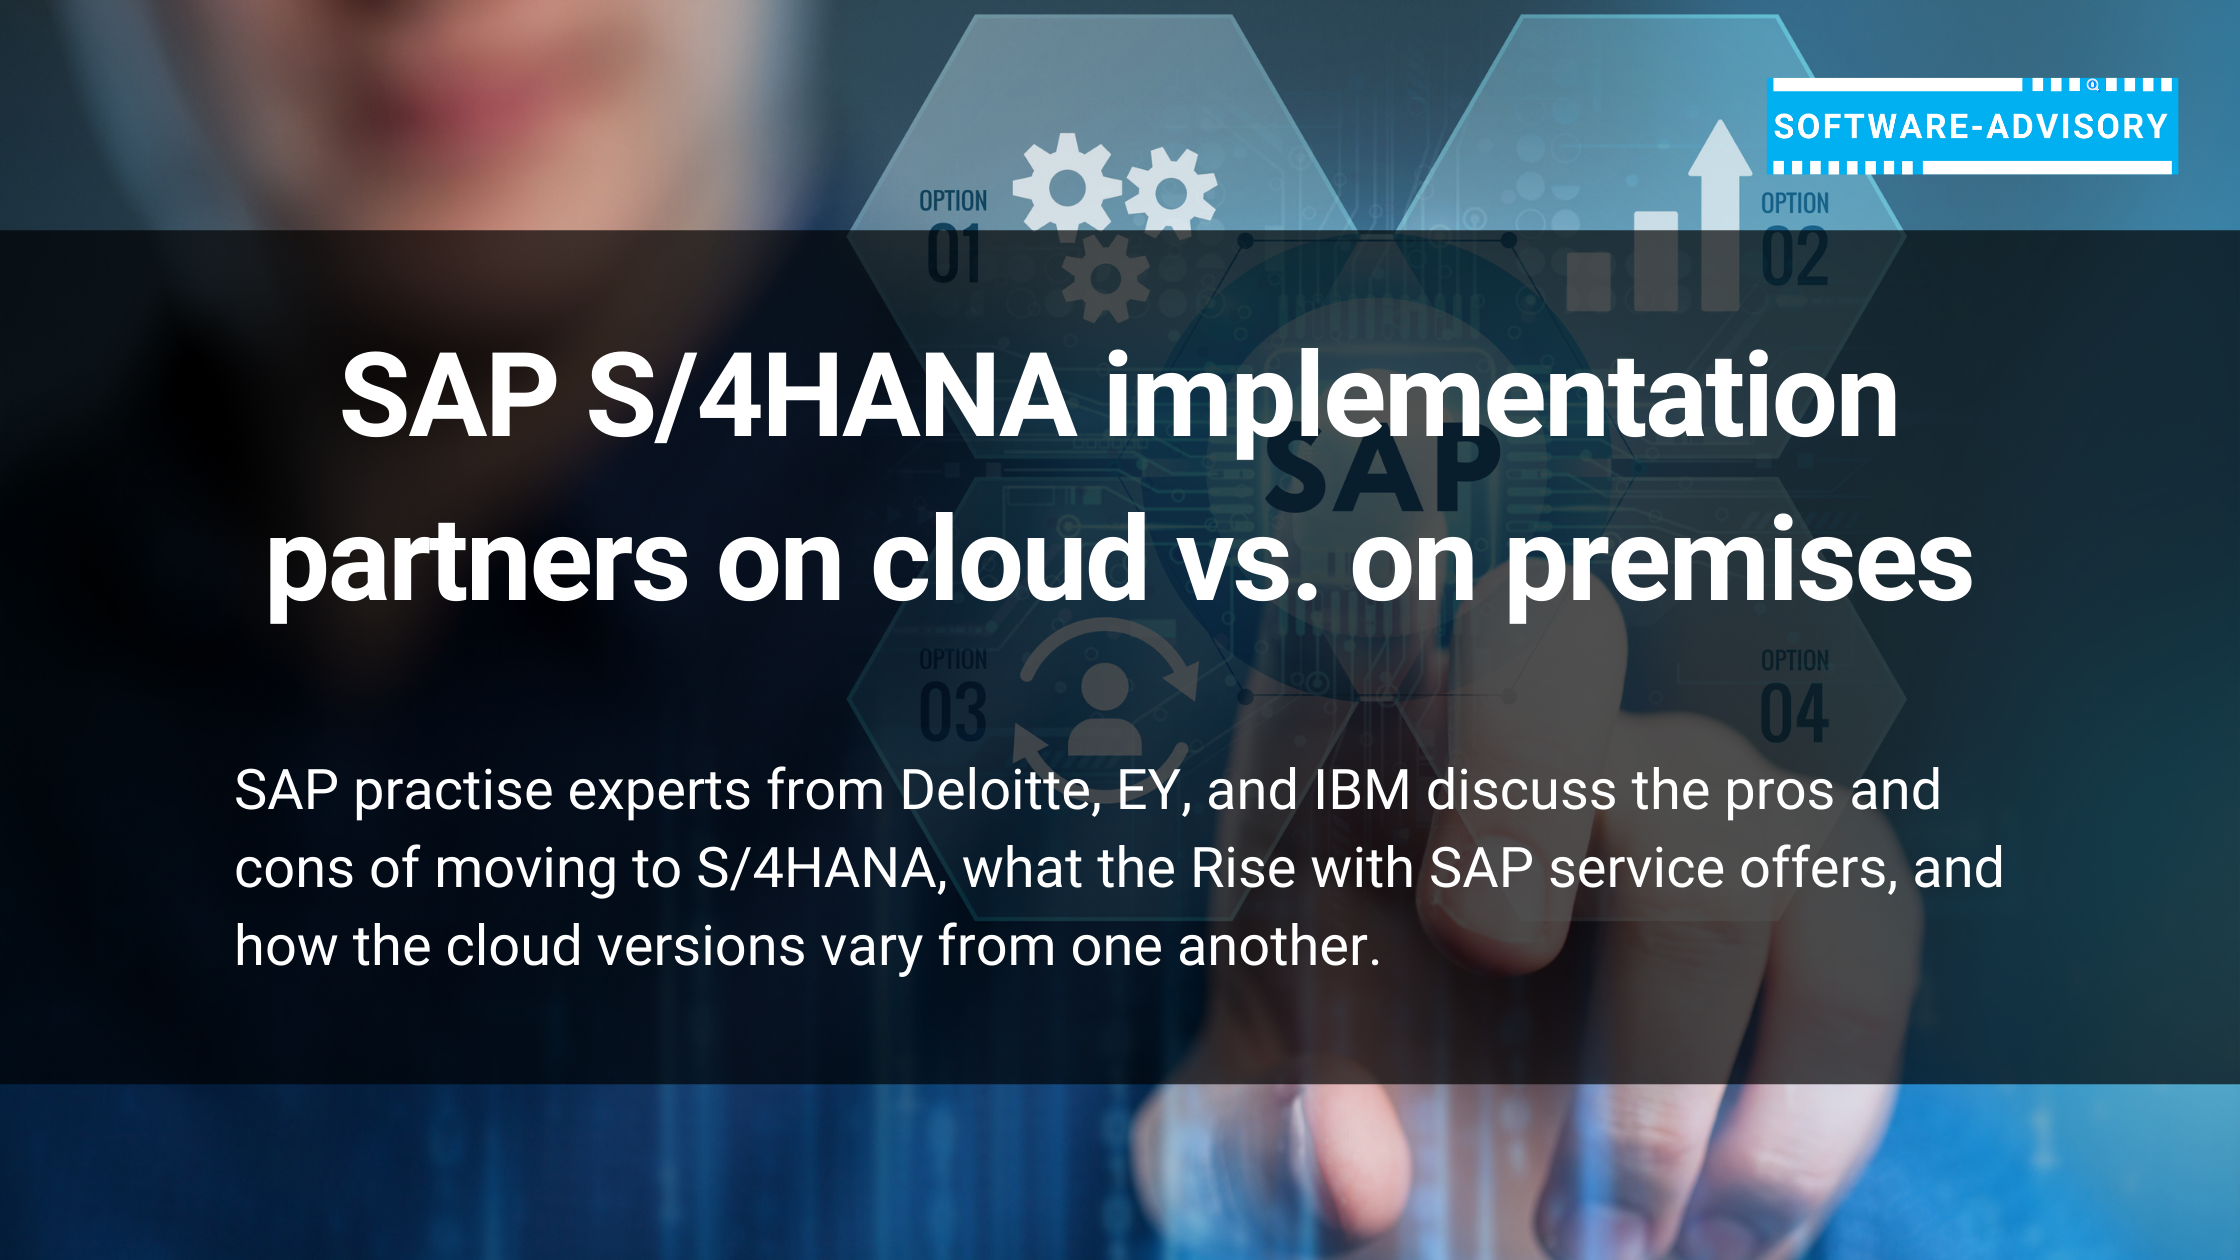 SAP S/4HANA implementation partners on cloud vs. on premises